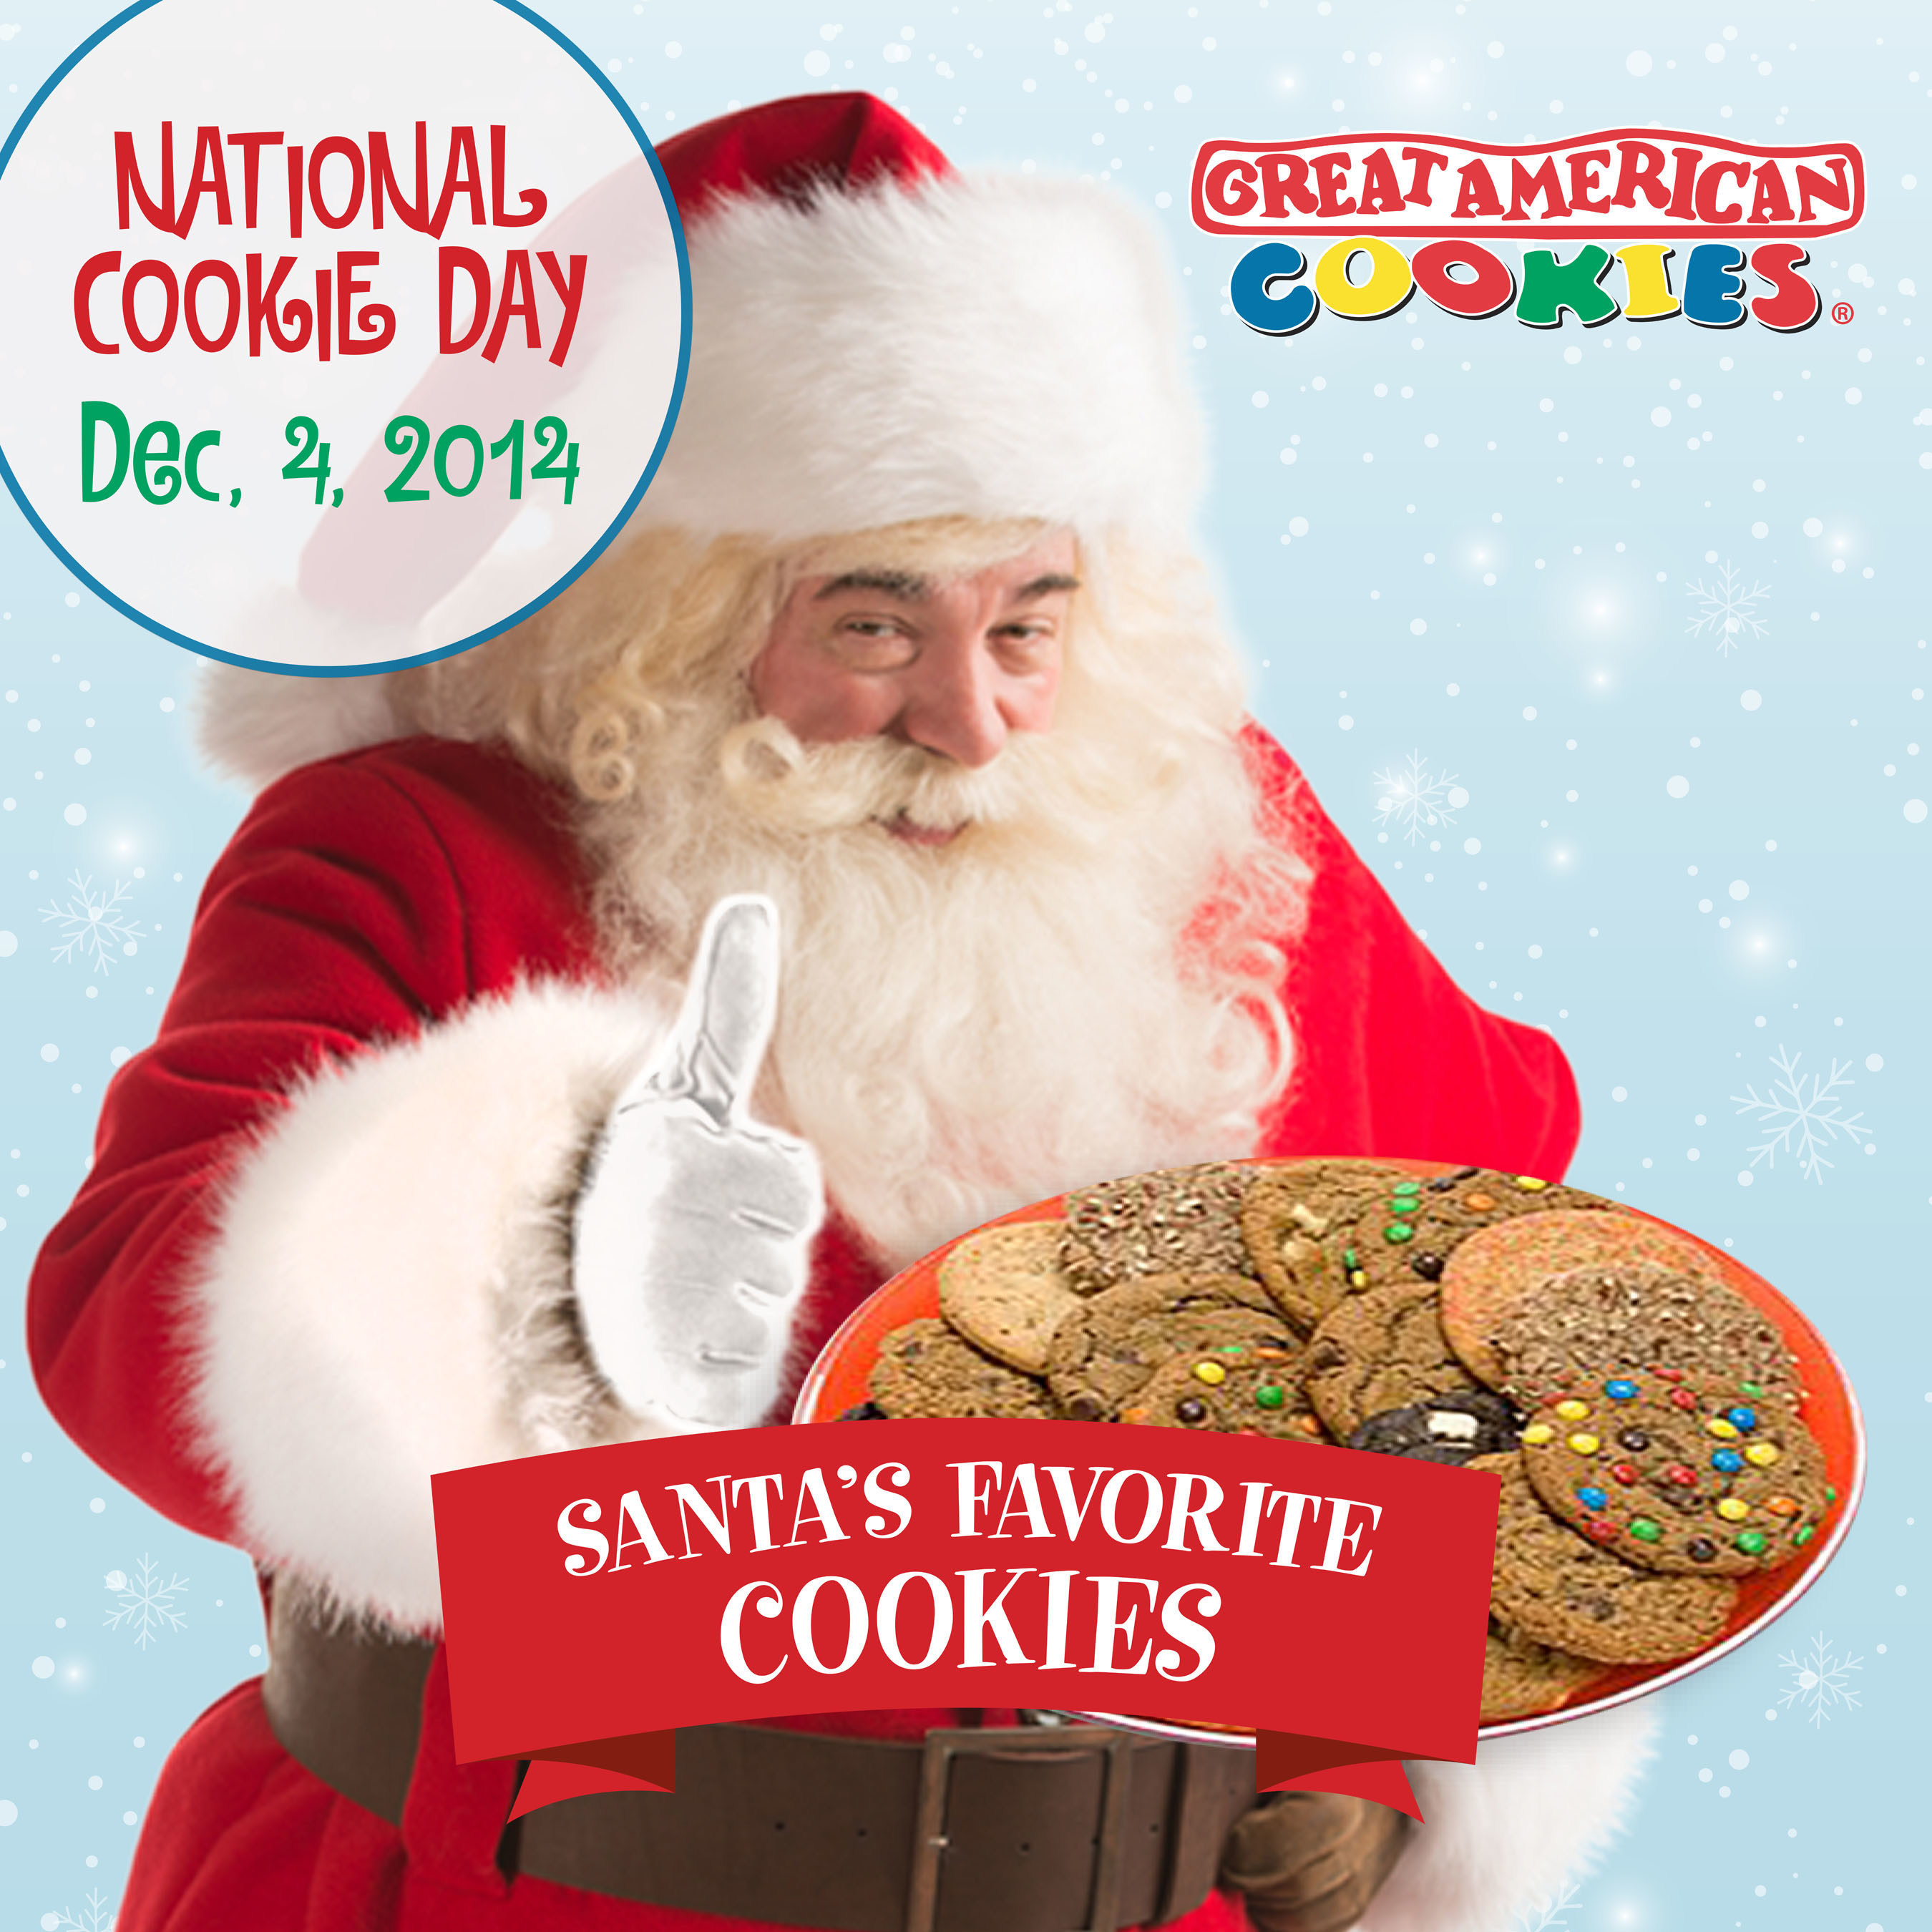 Free Cookie on Dec. 4 at Great American Cookies!